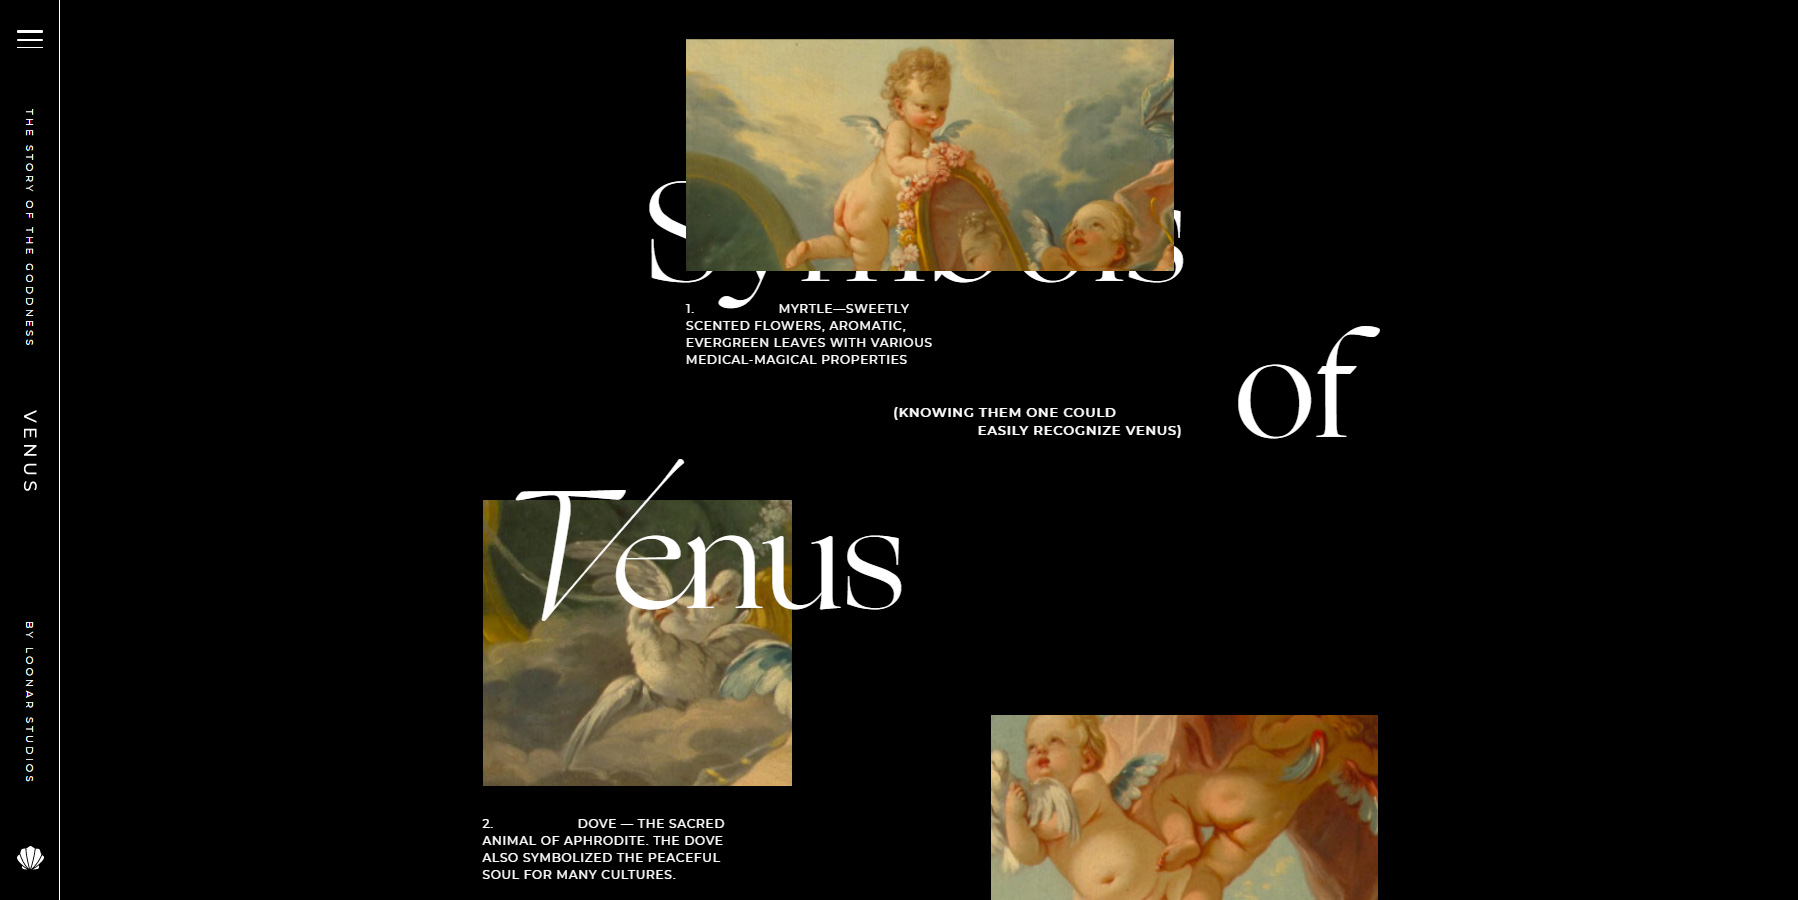 VENUS - Website of the Day